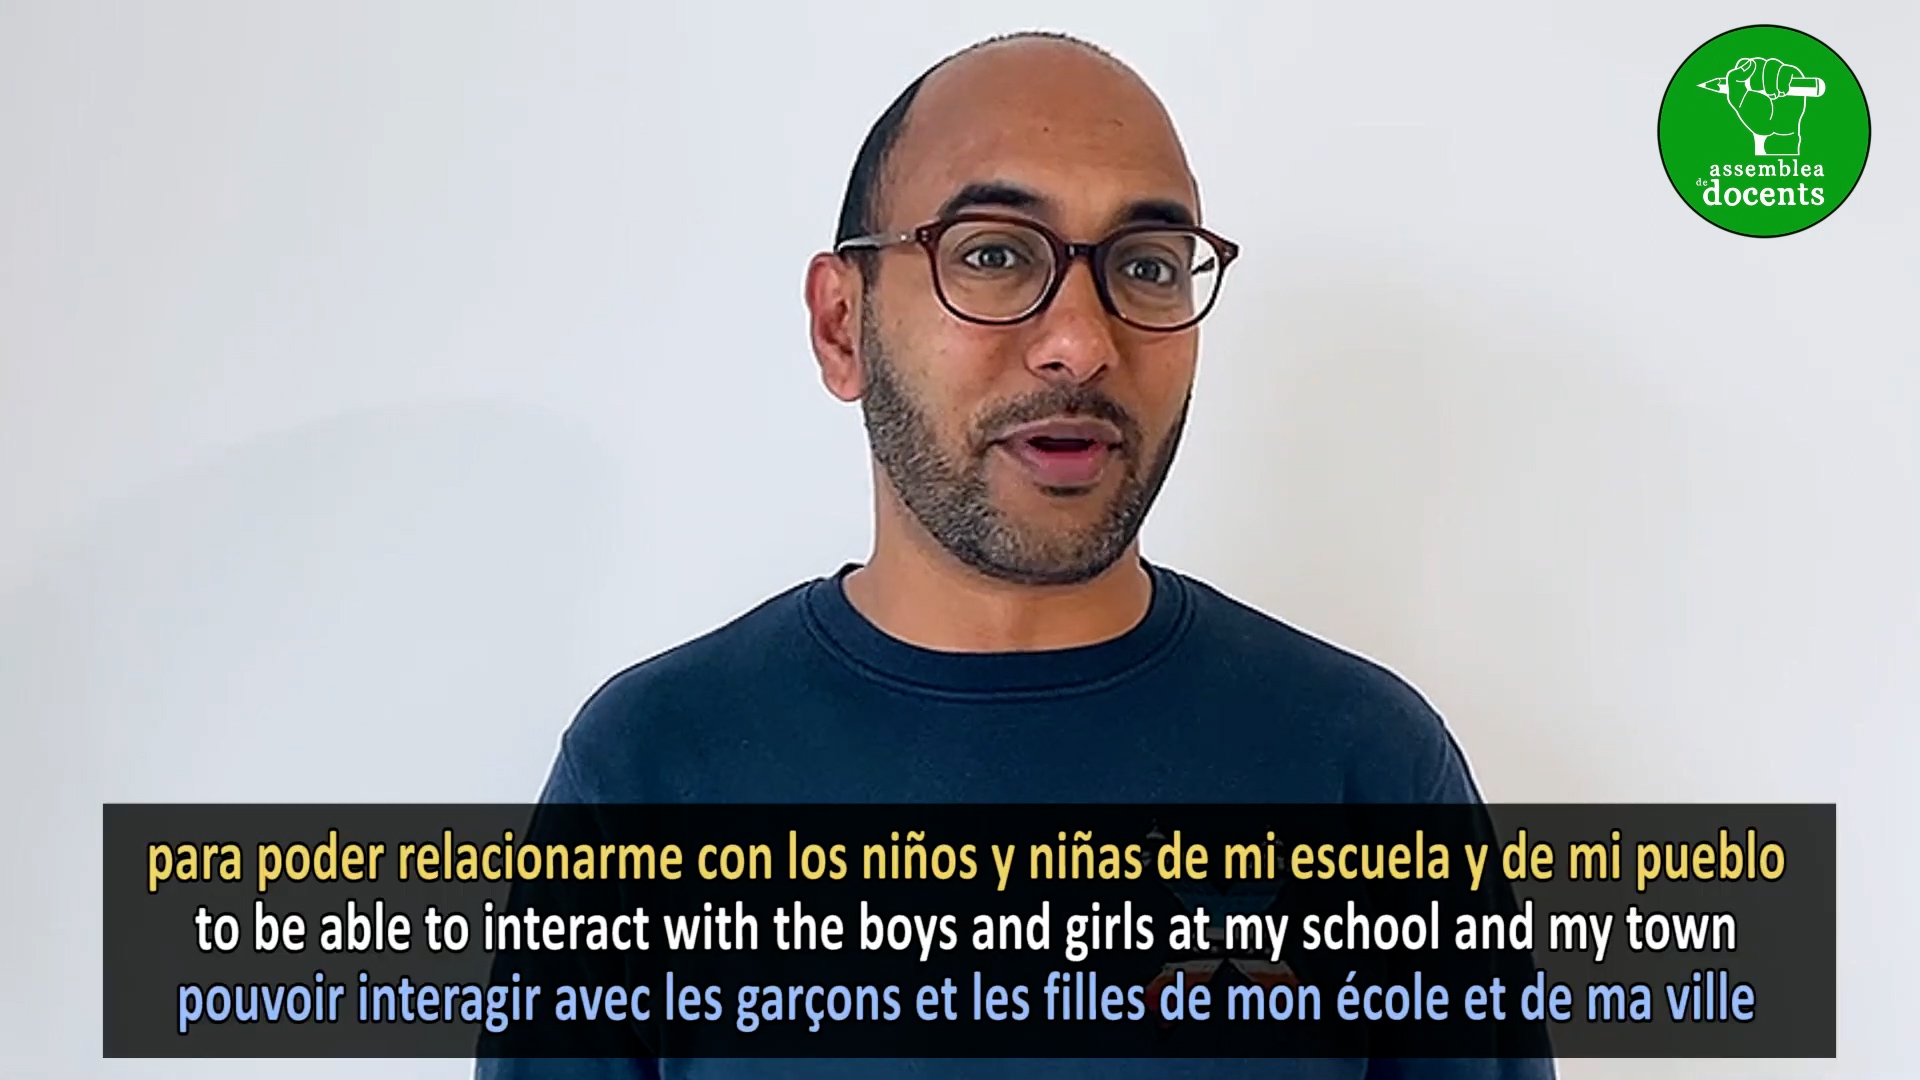 El diputado socialista Omar Lamin, en el vídeo de la Assemblea de Docents.